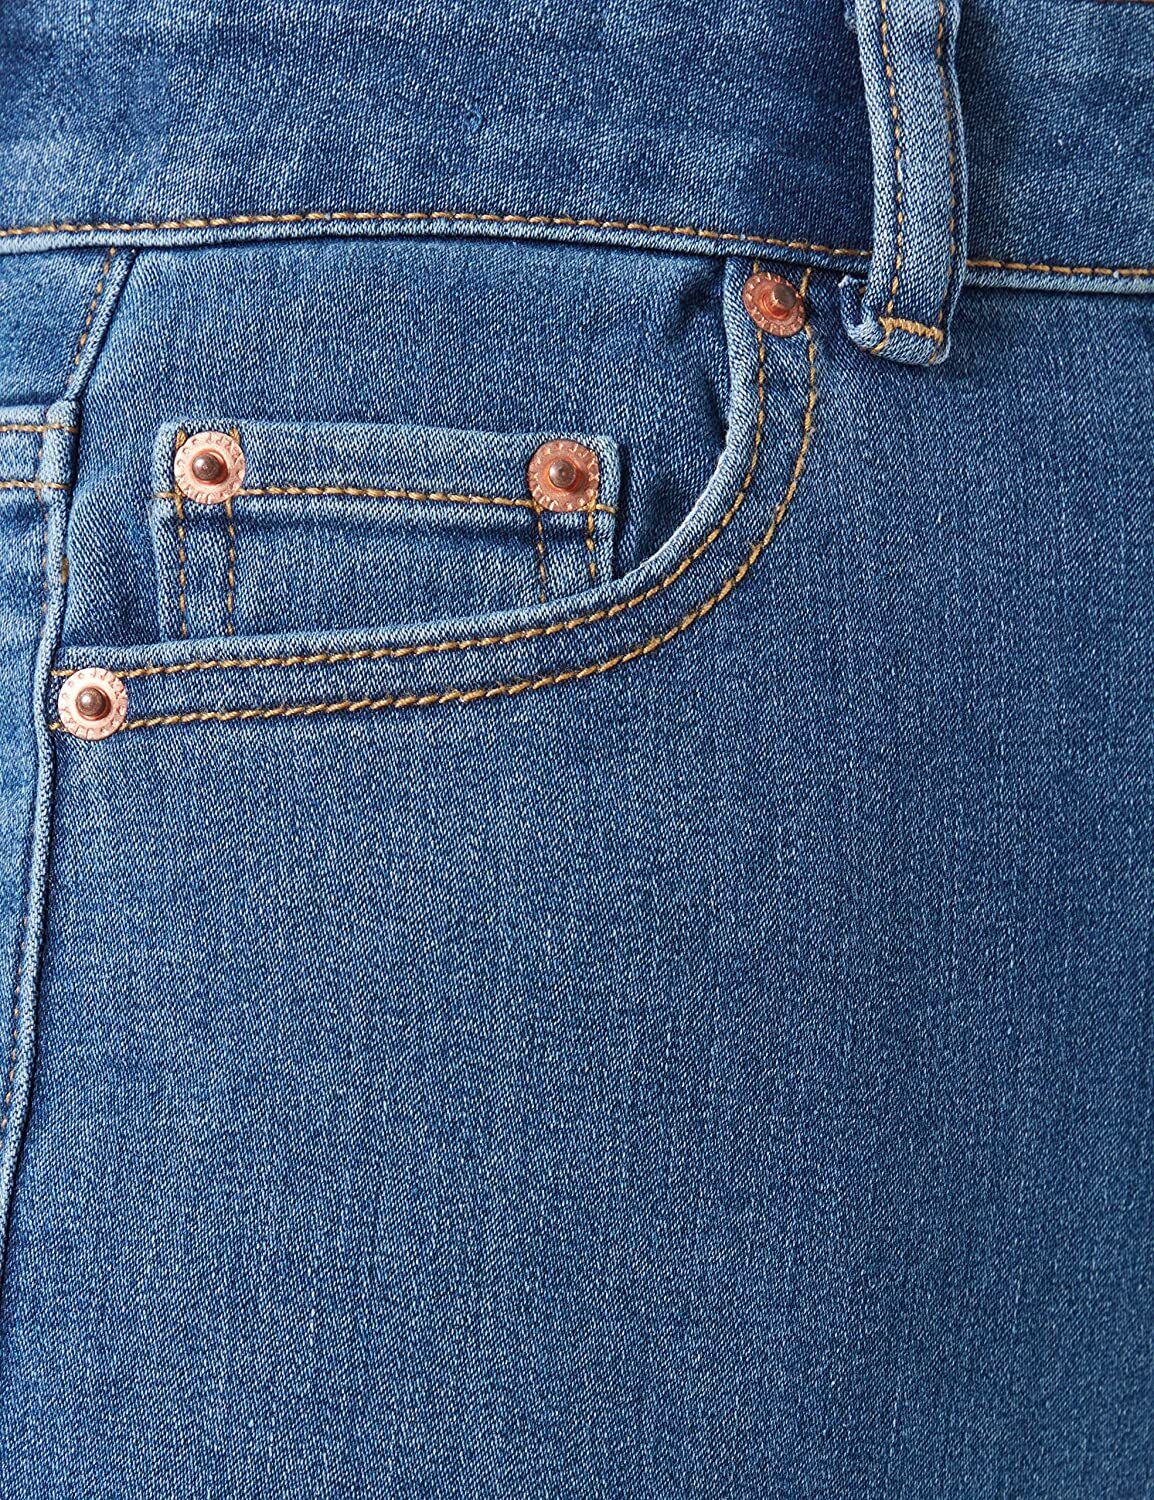 Jack & Jones Womens Skinny Stretch Jeans Ladies Denim Slim Fit Pants UK XS-XL